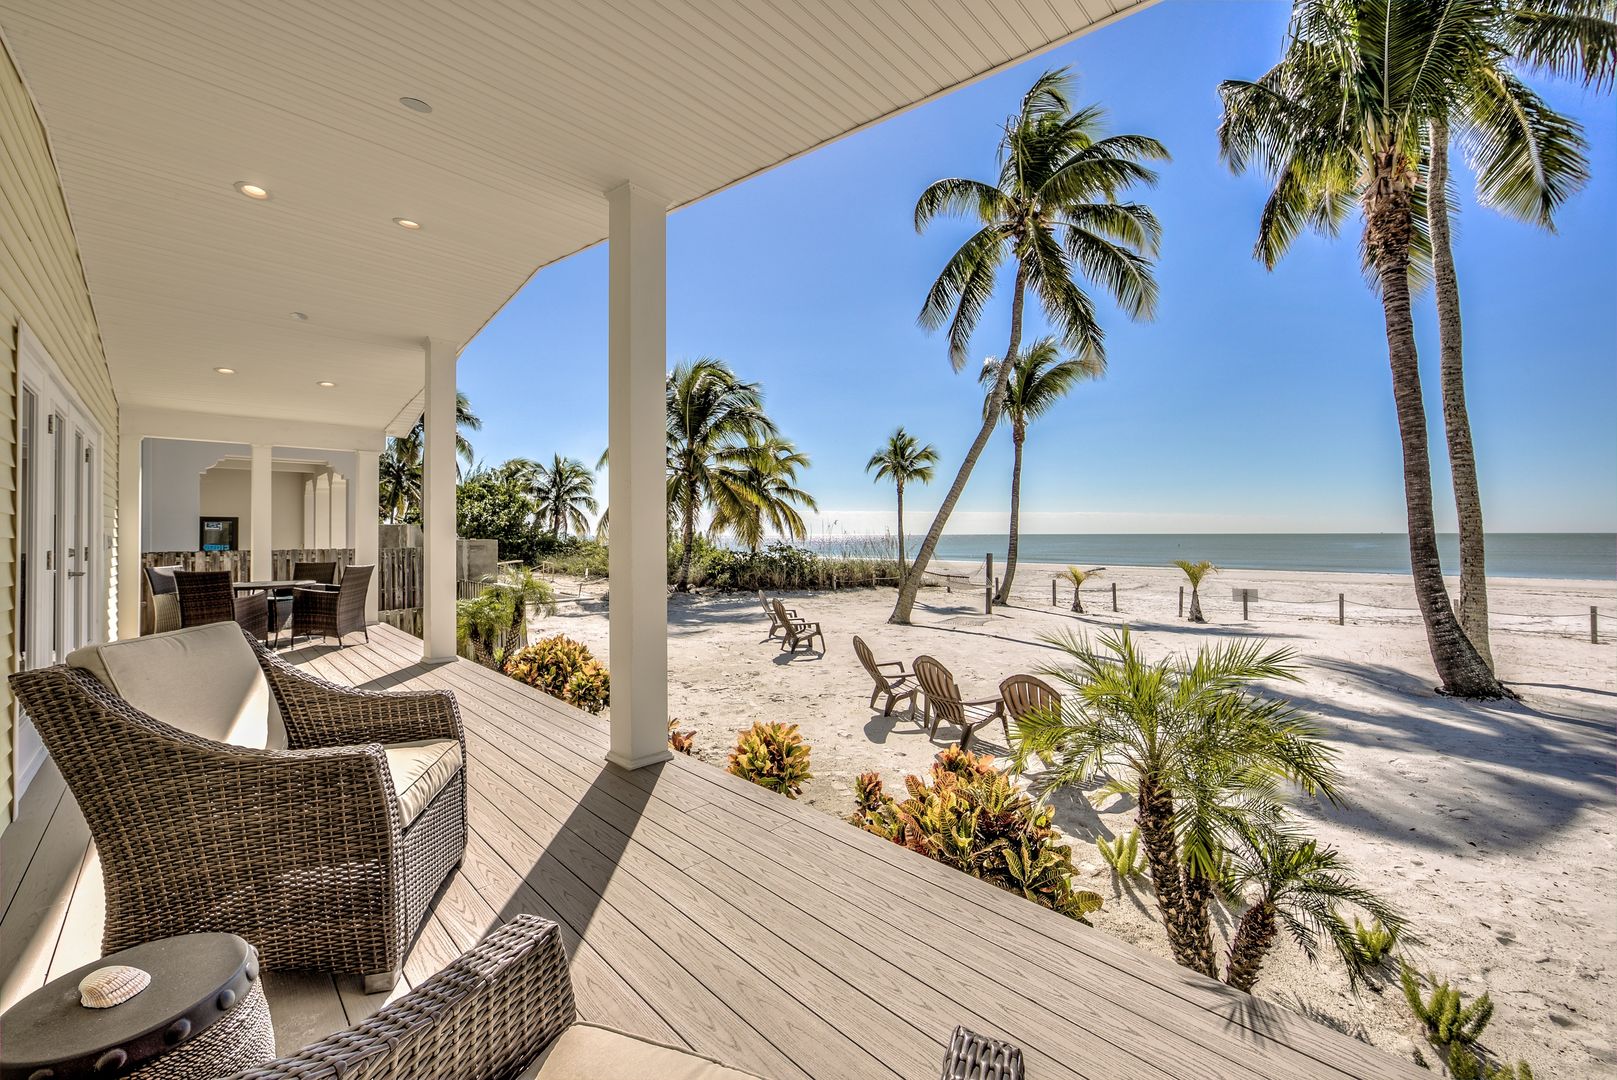 ft myers beachfront rentals